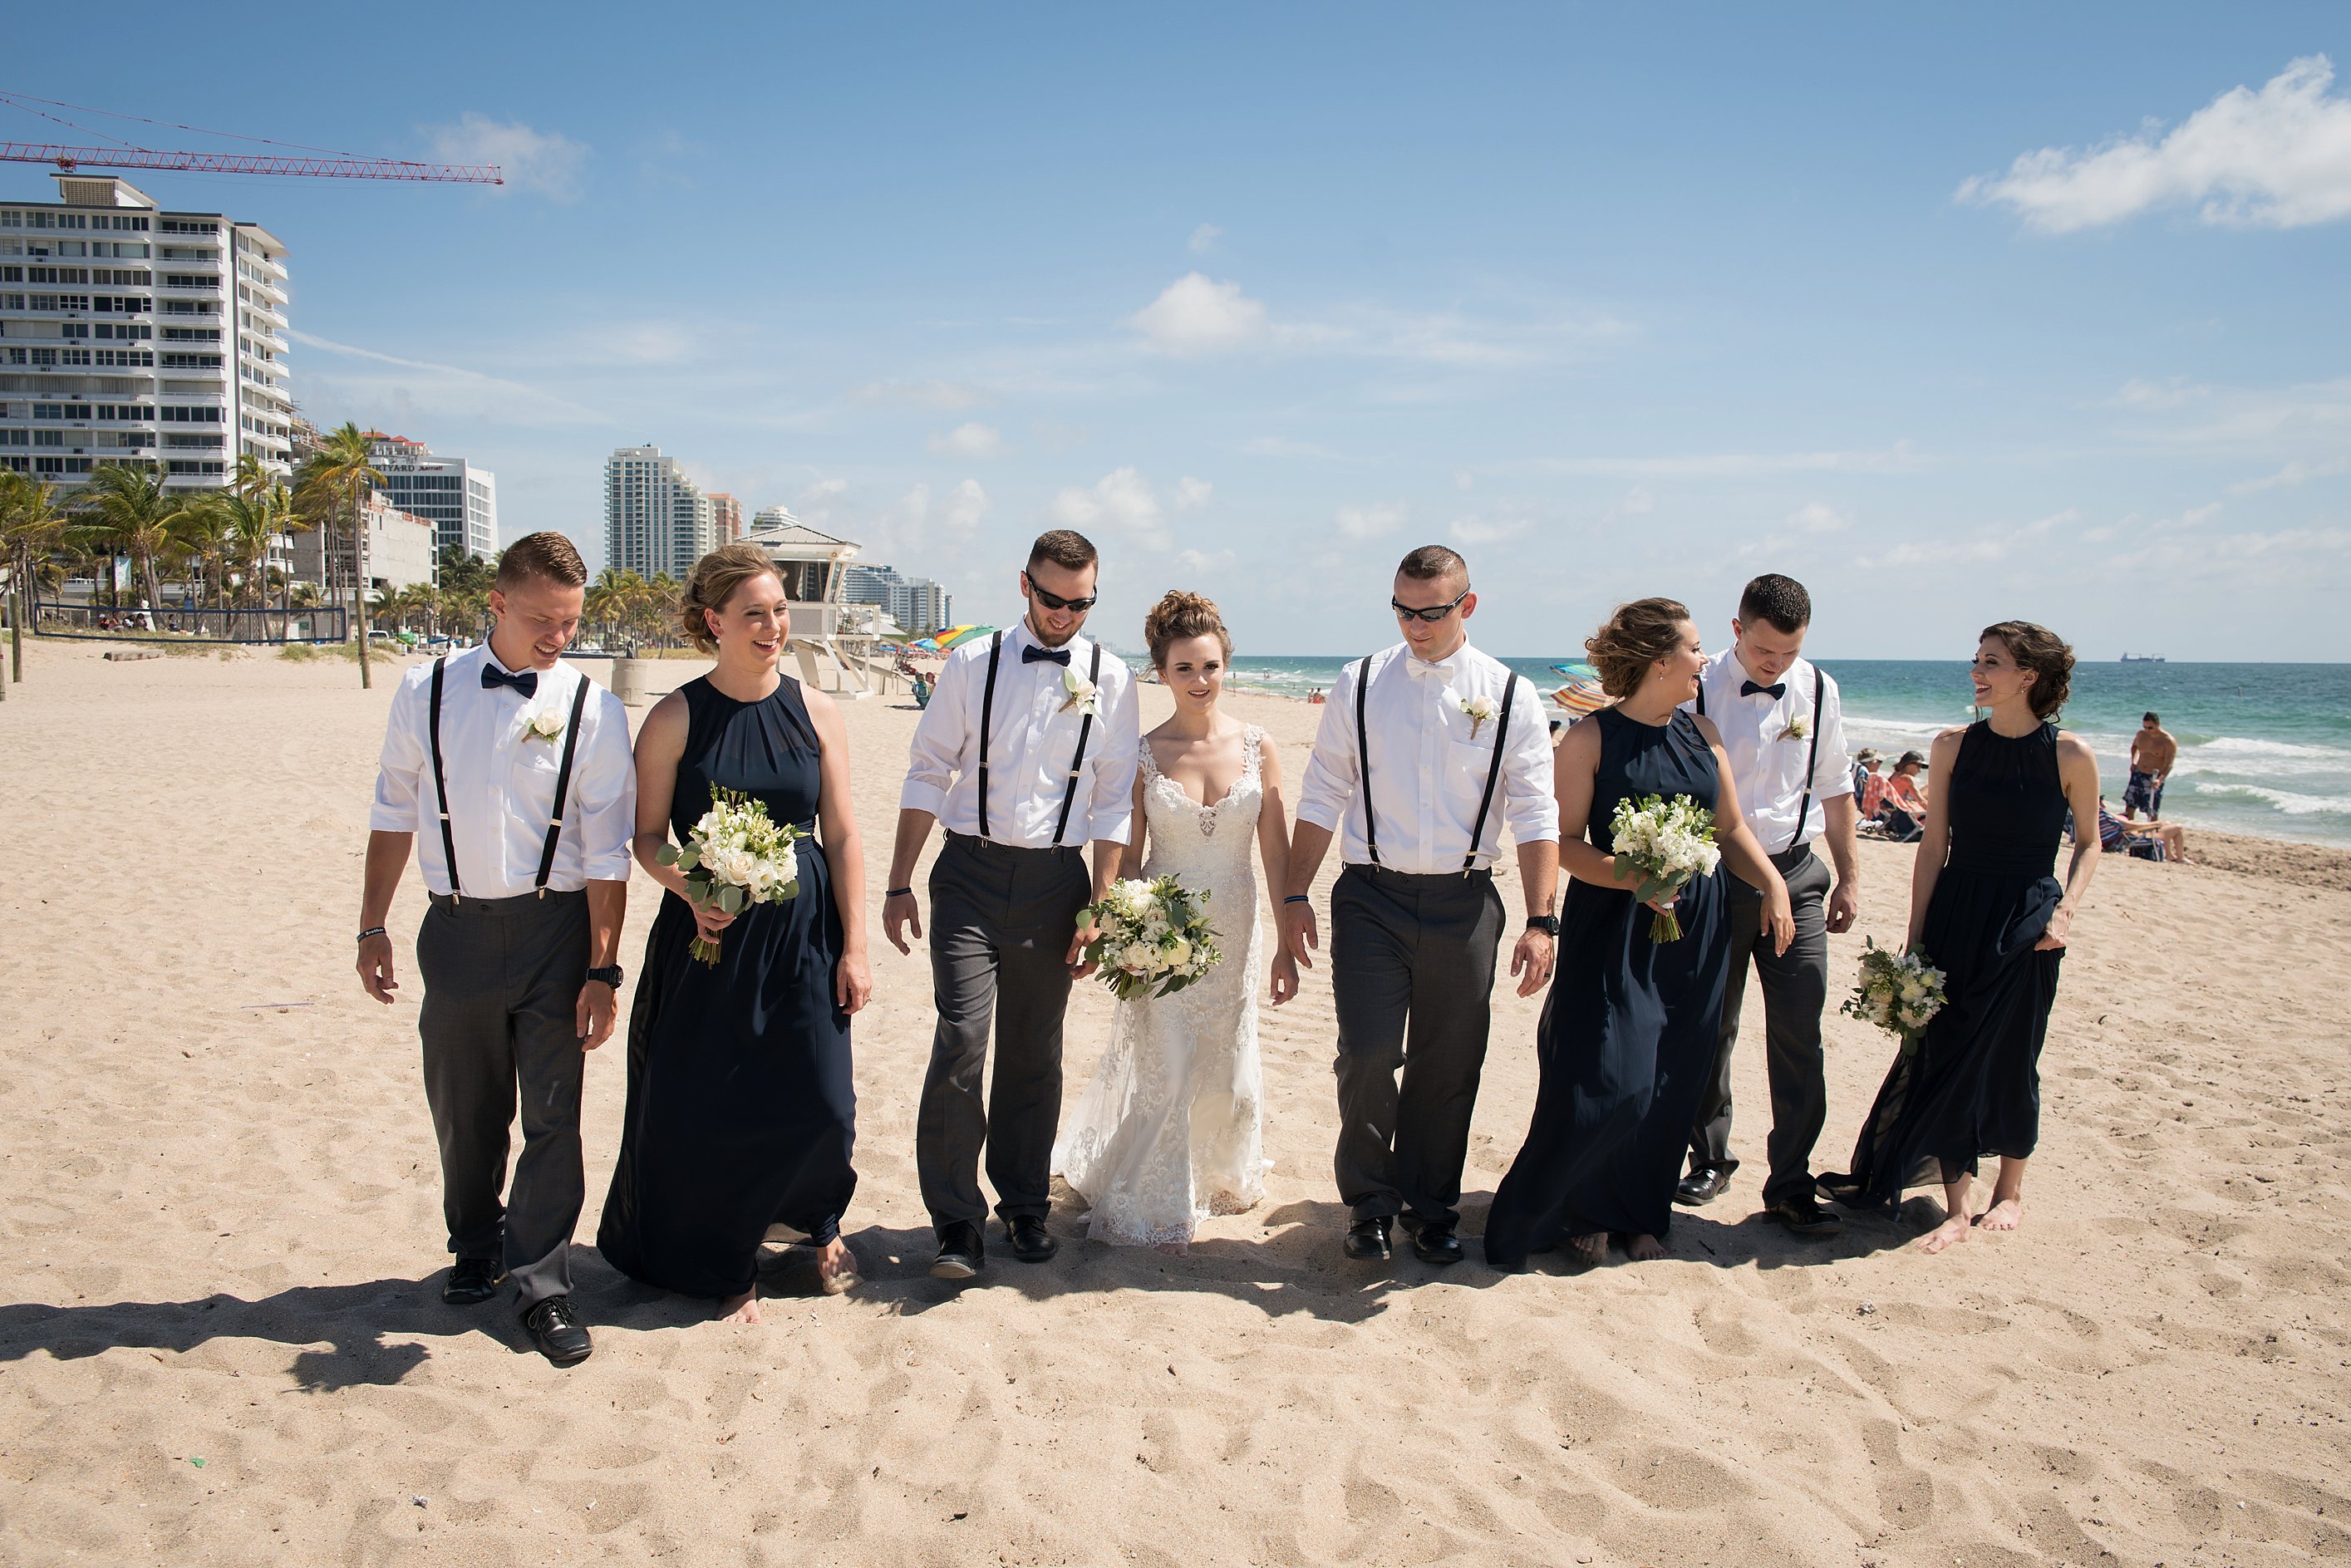 Group walking wedding photo